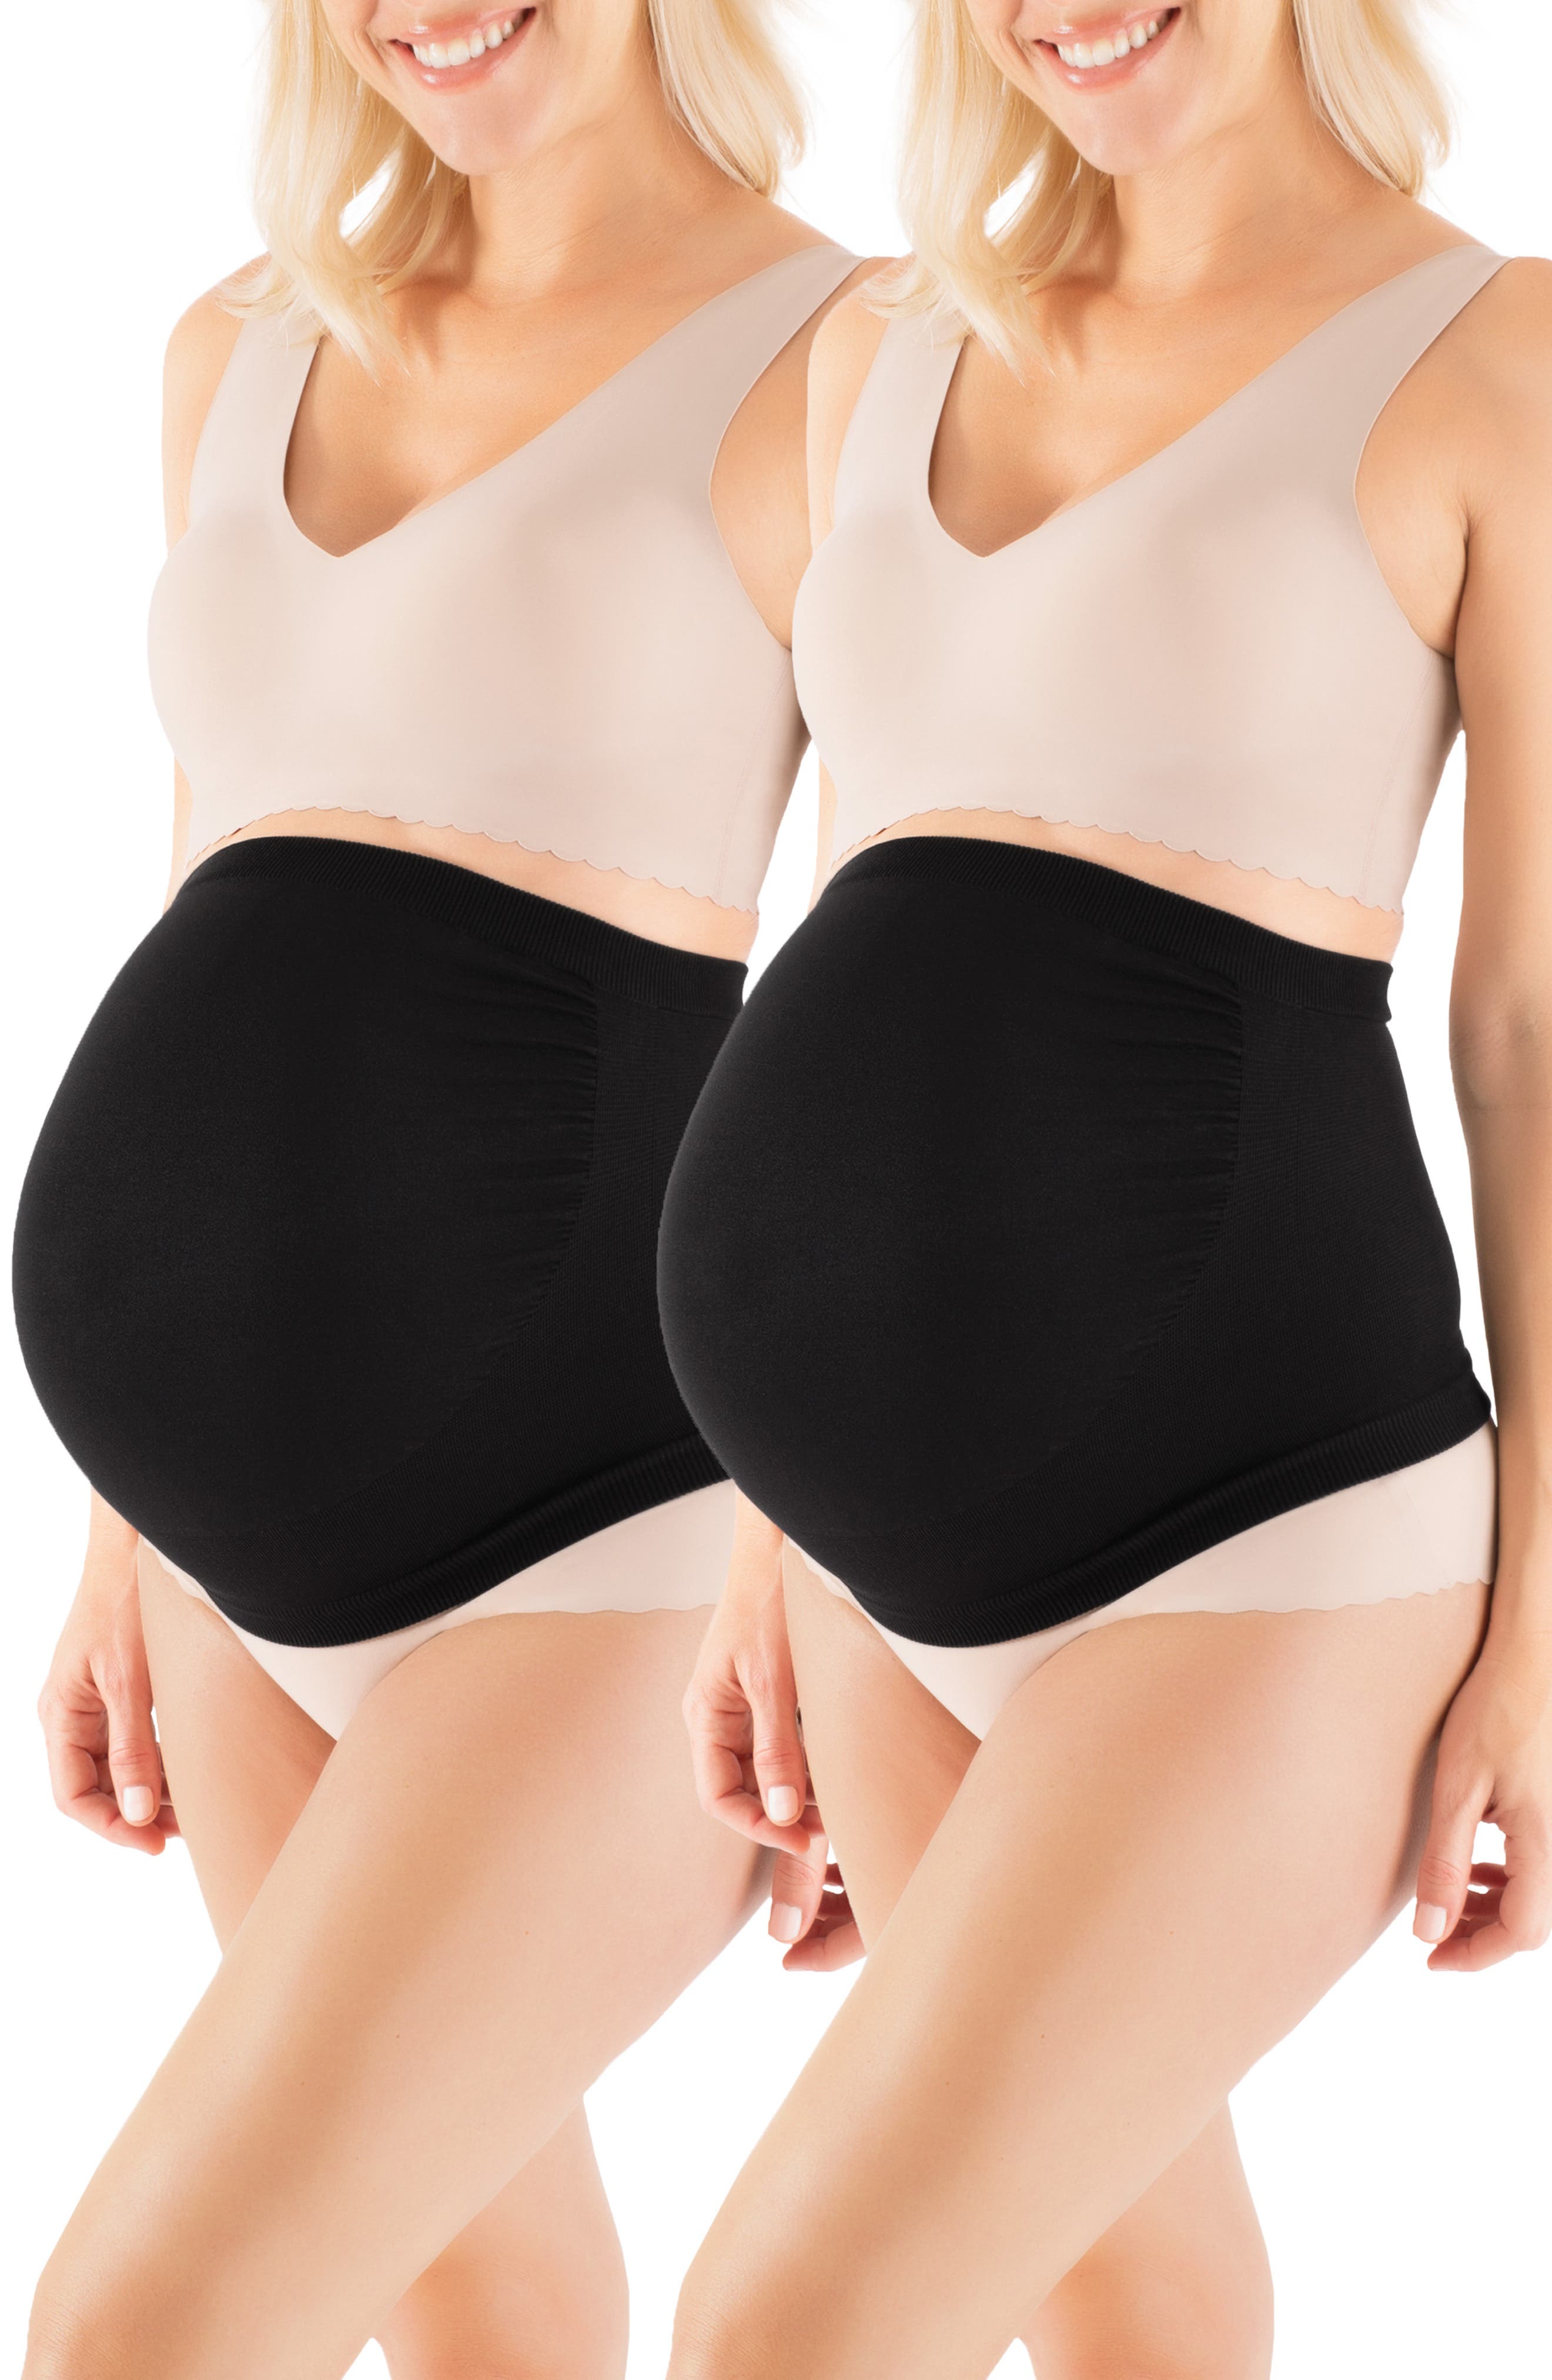 Nordstrom Women Clothing Underwear Bump Bands Upsie Belly Maternity Support Belt in Black at Nordstrom 